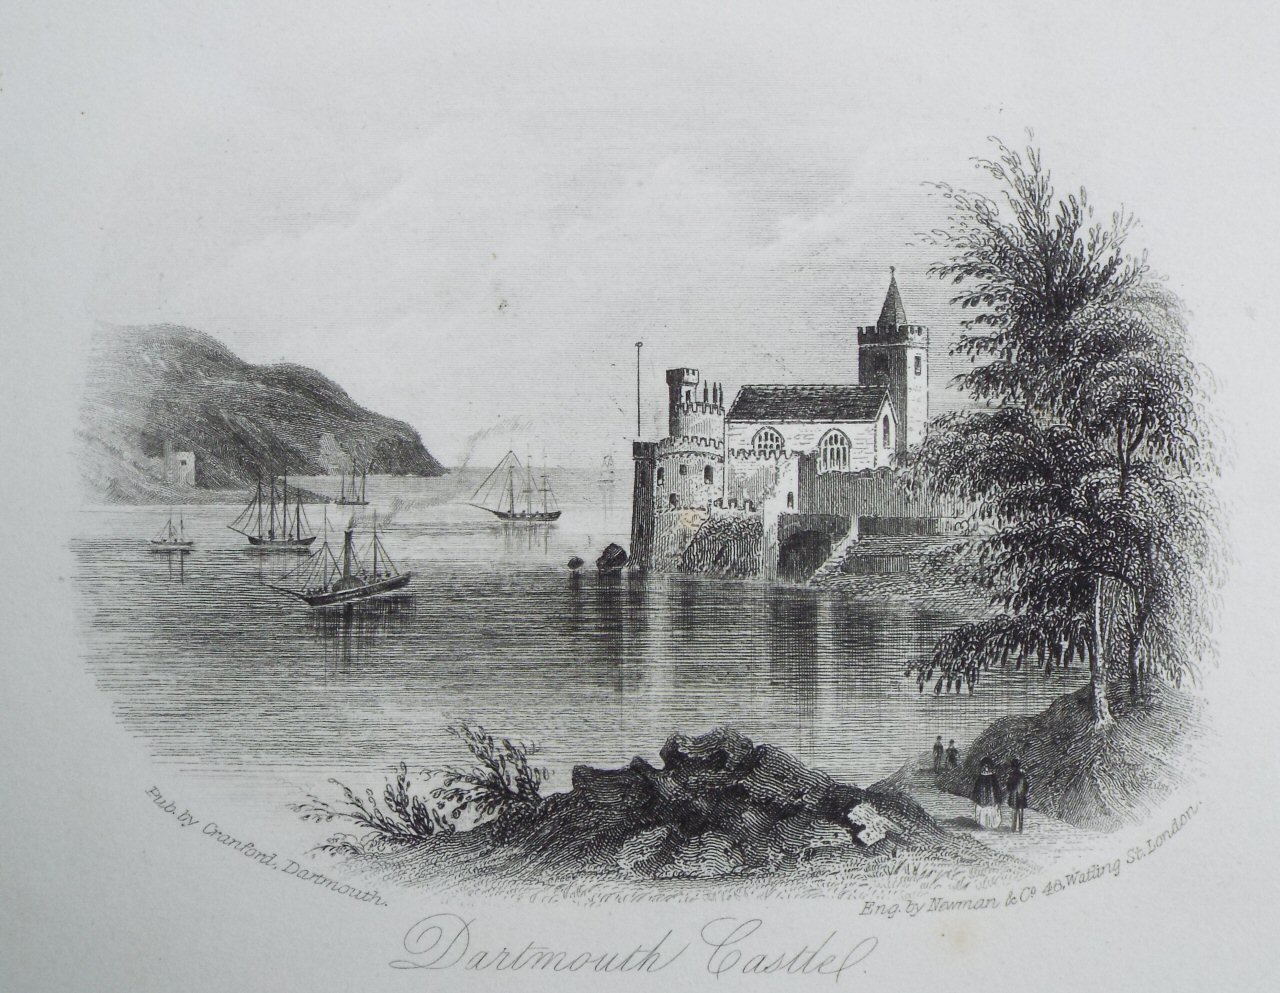 Steel Vignette - Dartmouth Castle - Newman